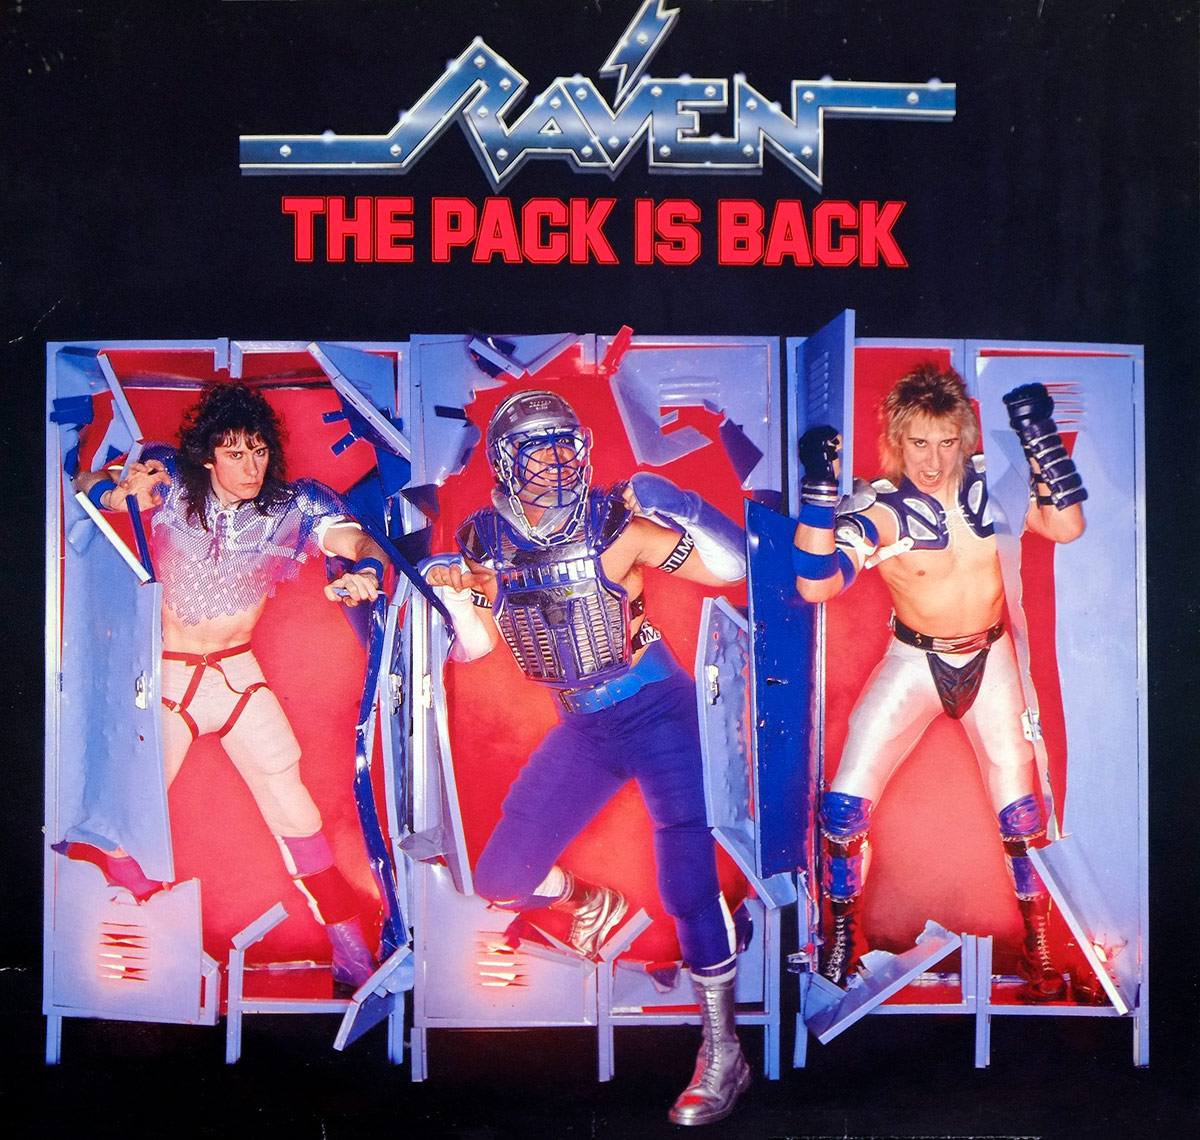 RAVEN - The Pack Is Back NWOBHM 12" Vinyl LP Album front cover https://vinyl-records.nl